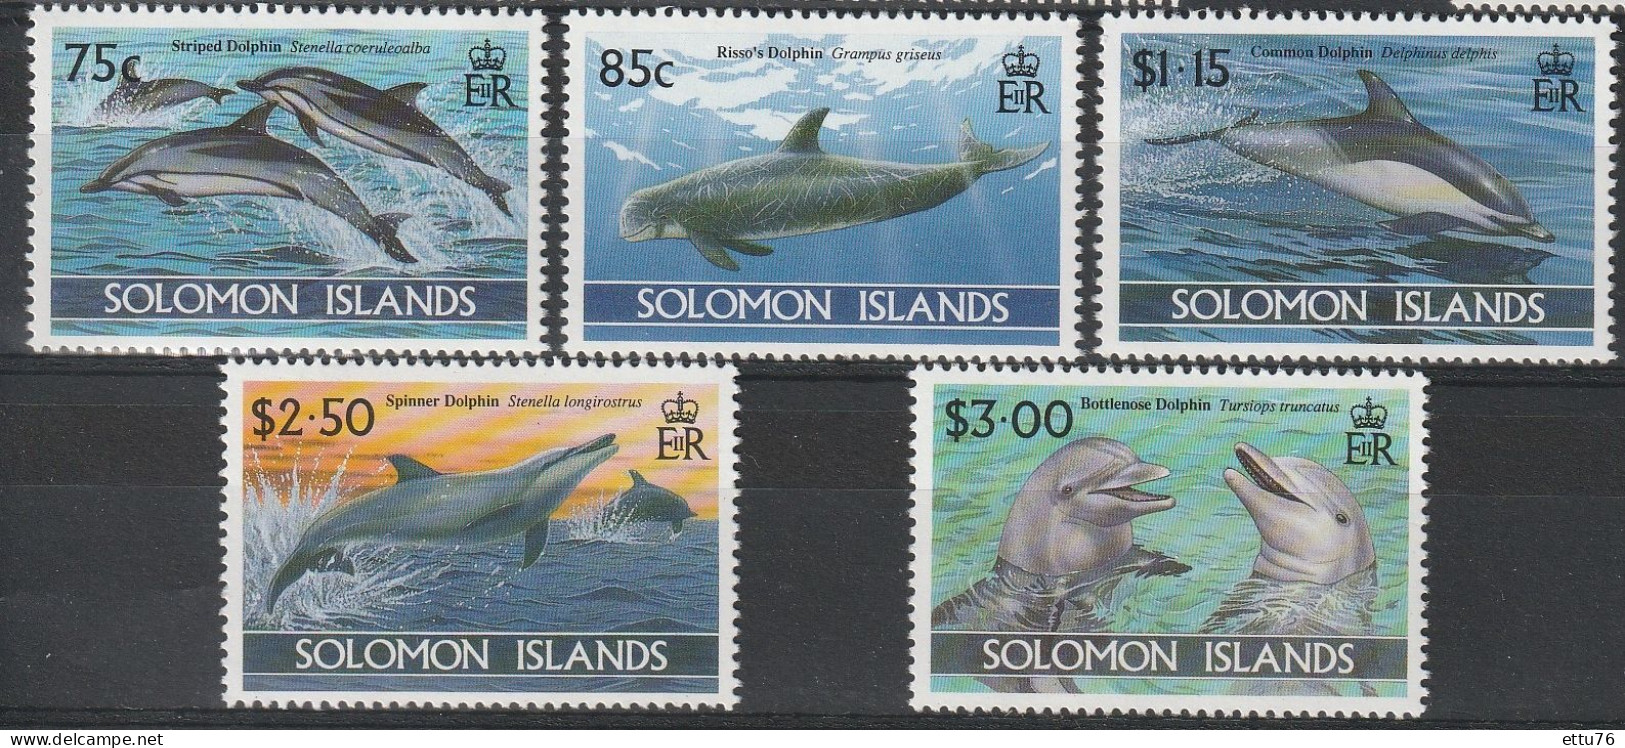 Solomon Islands 1994  Dolphins  Set  MNH - Delfini